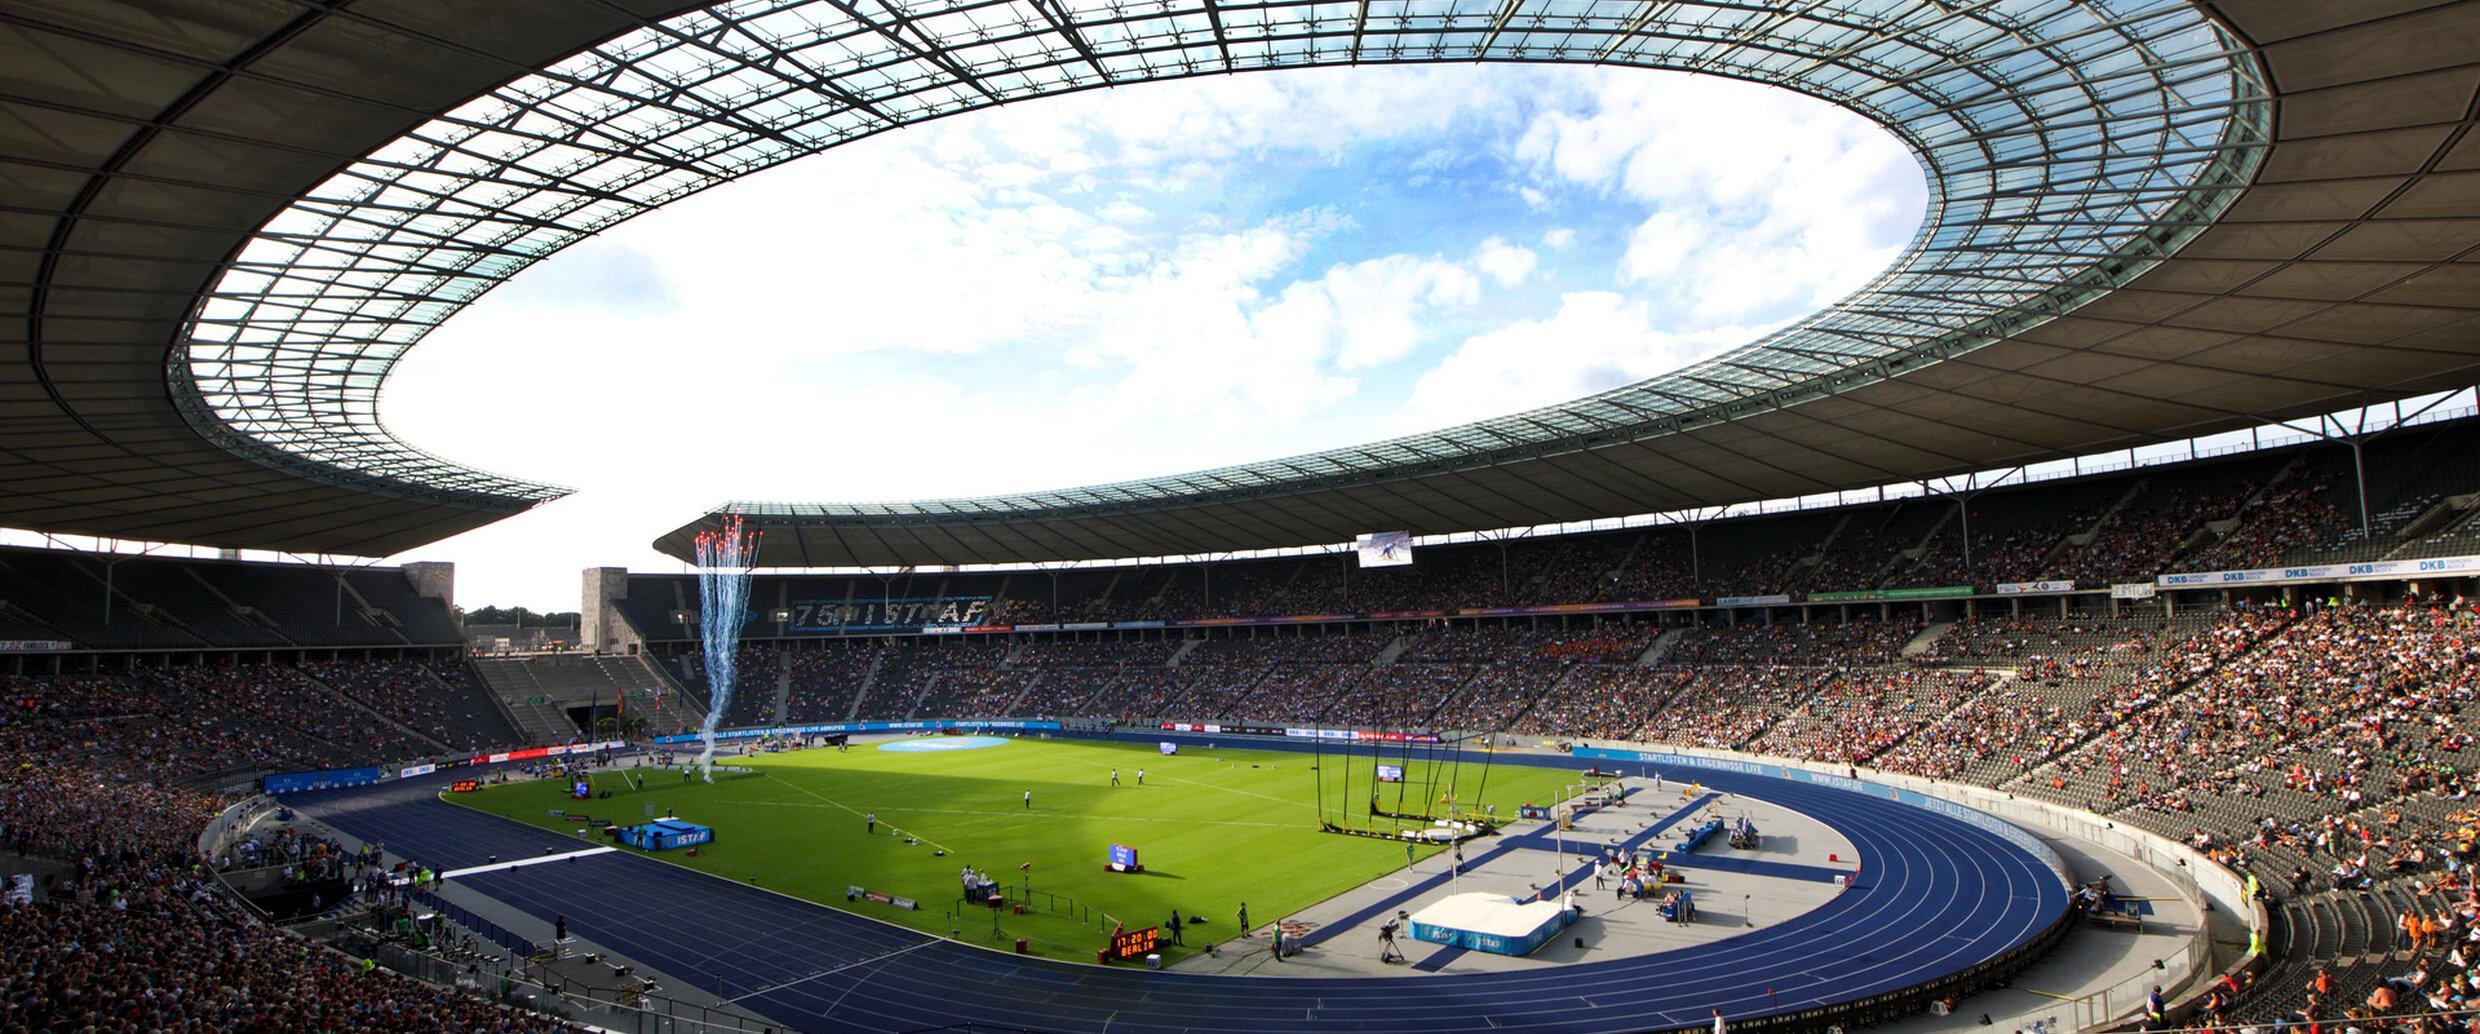 Hertha Berlin Tickets at the Olympiastadion